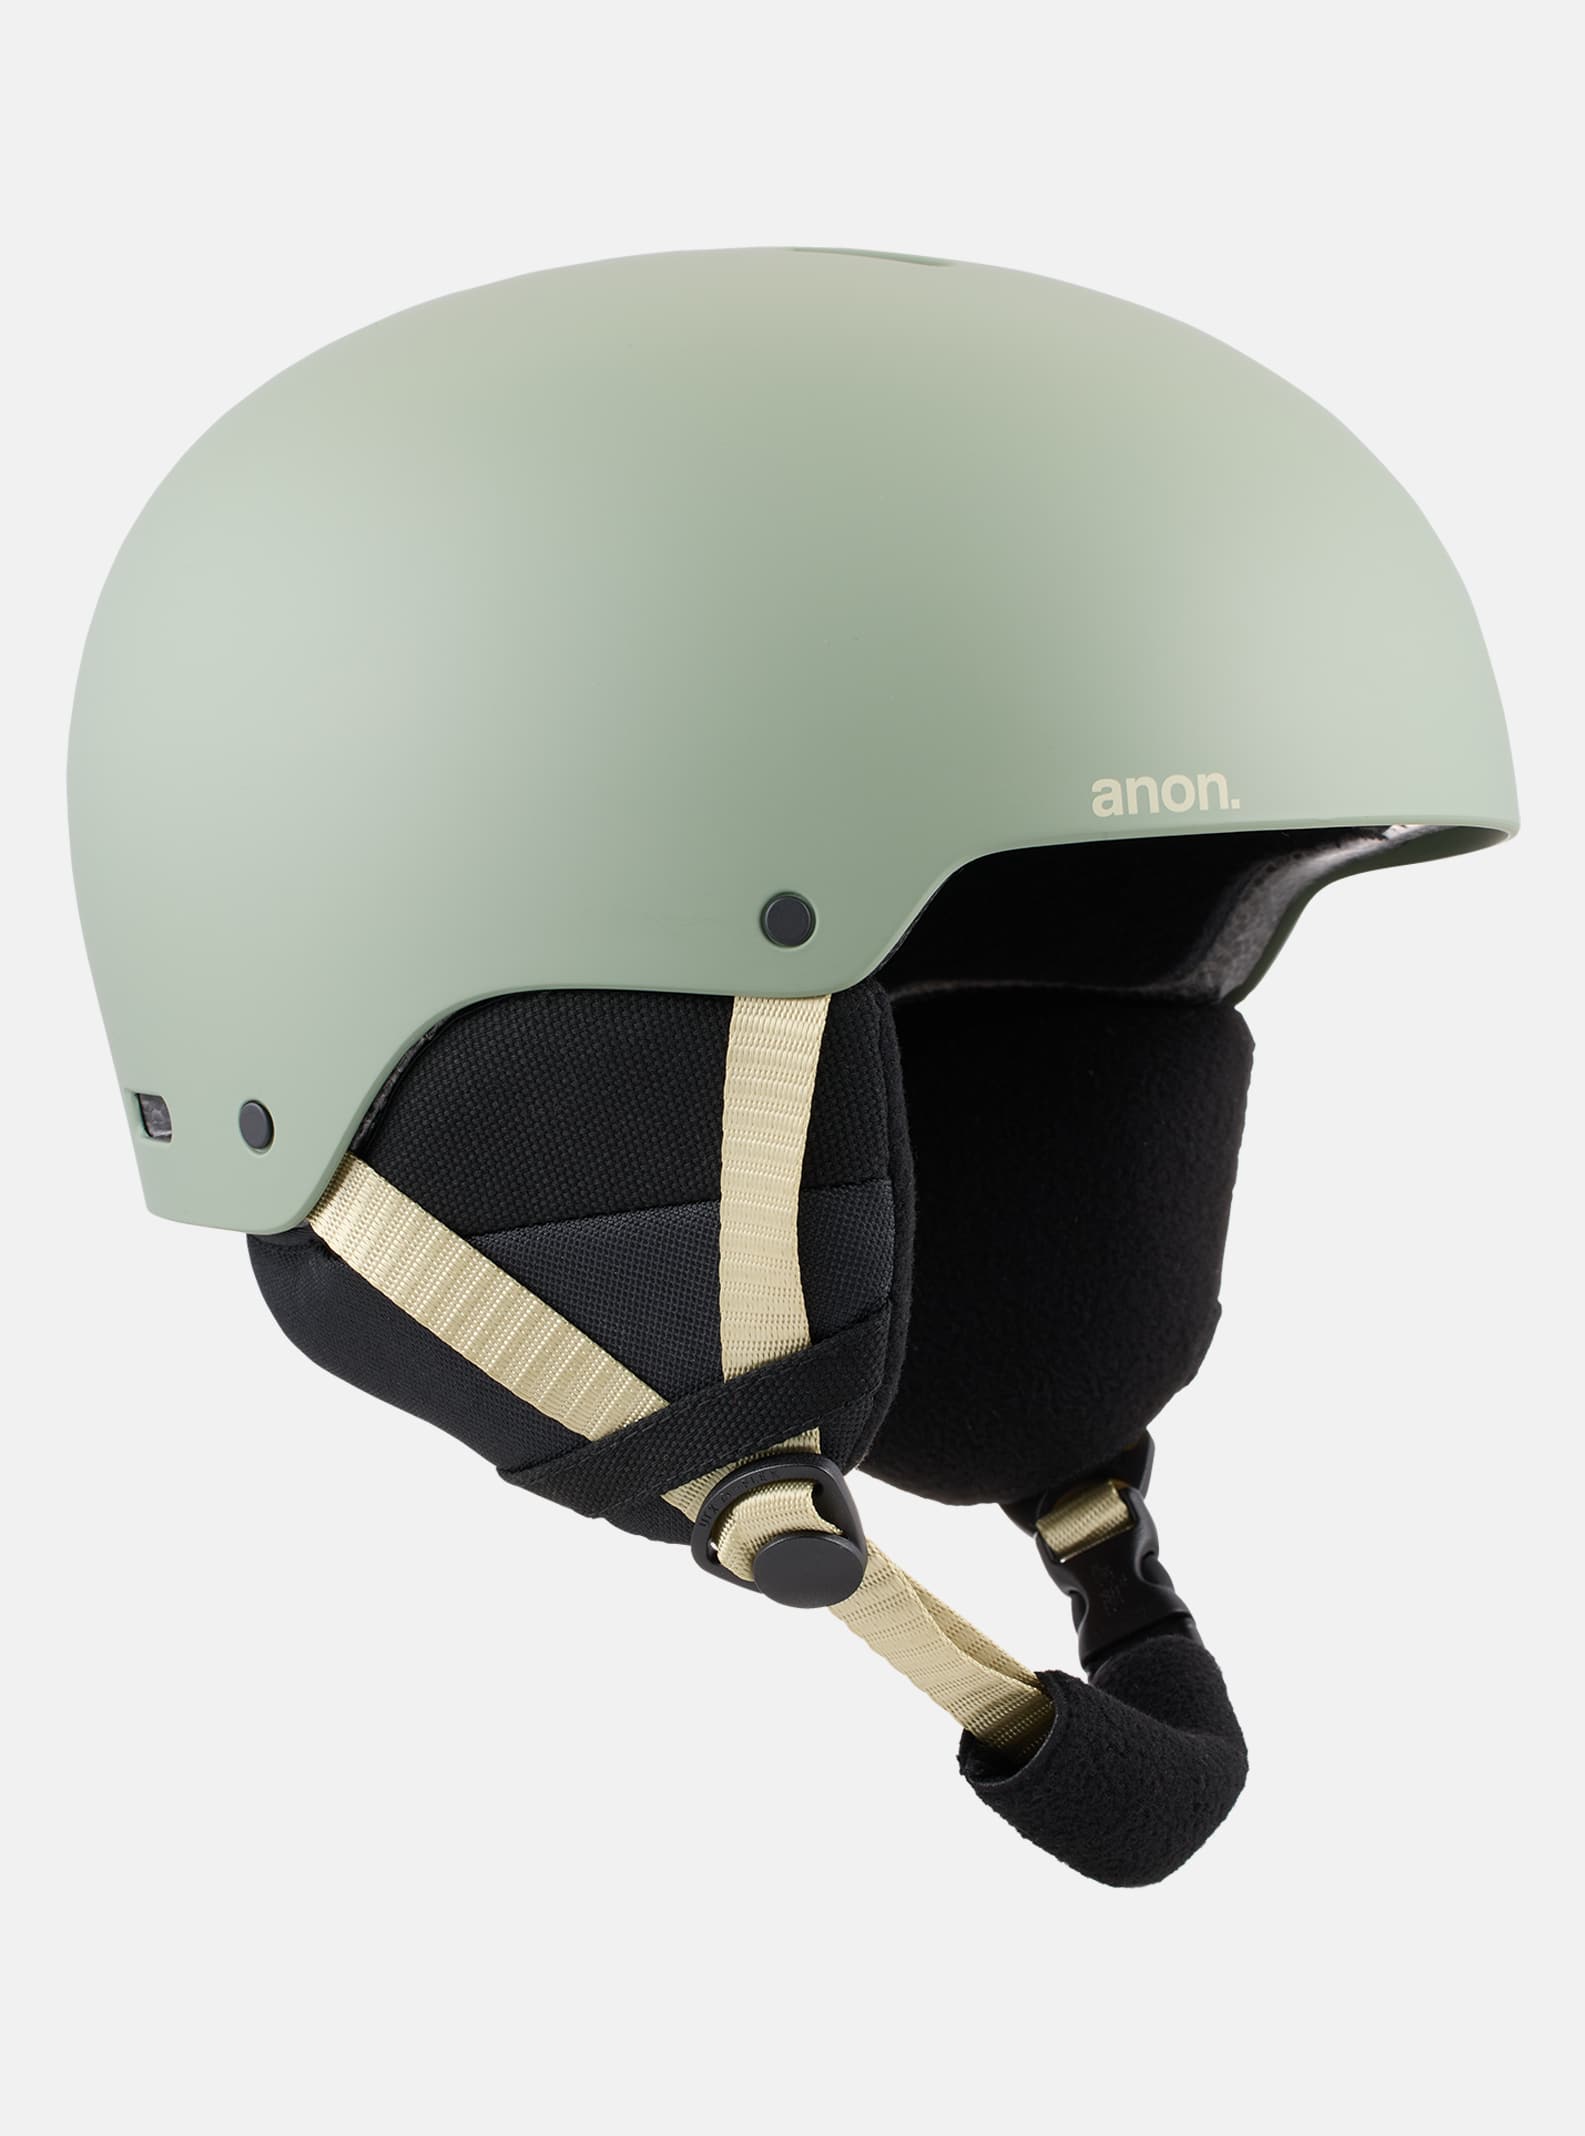 Raider 3 Ski & Snowboard Helmet